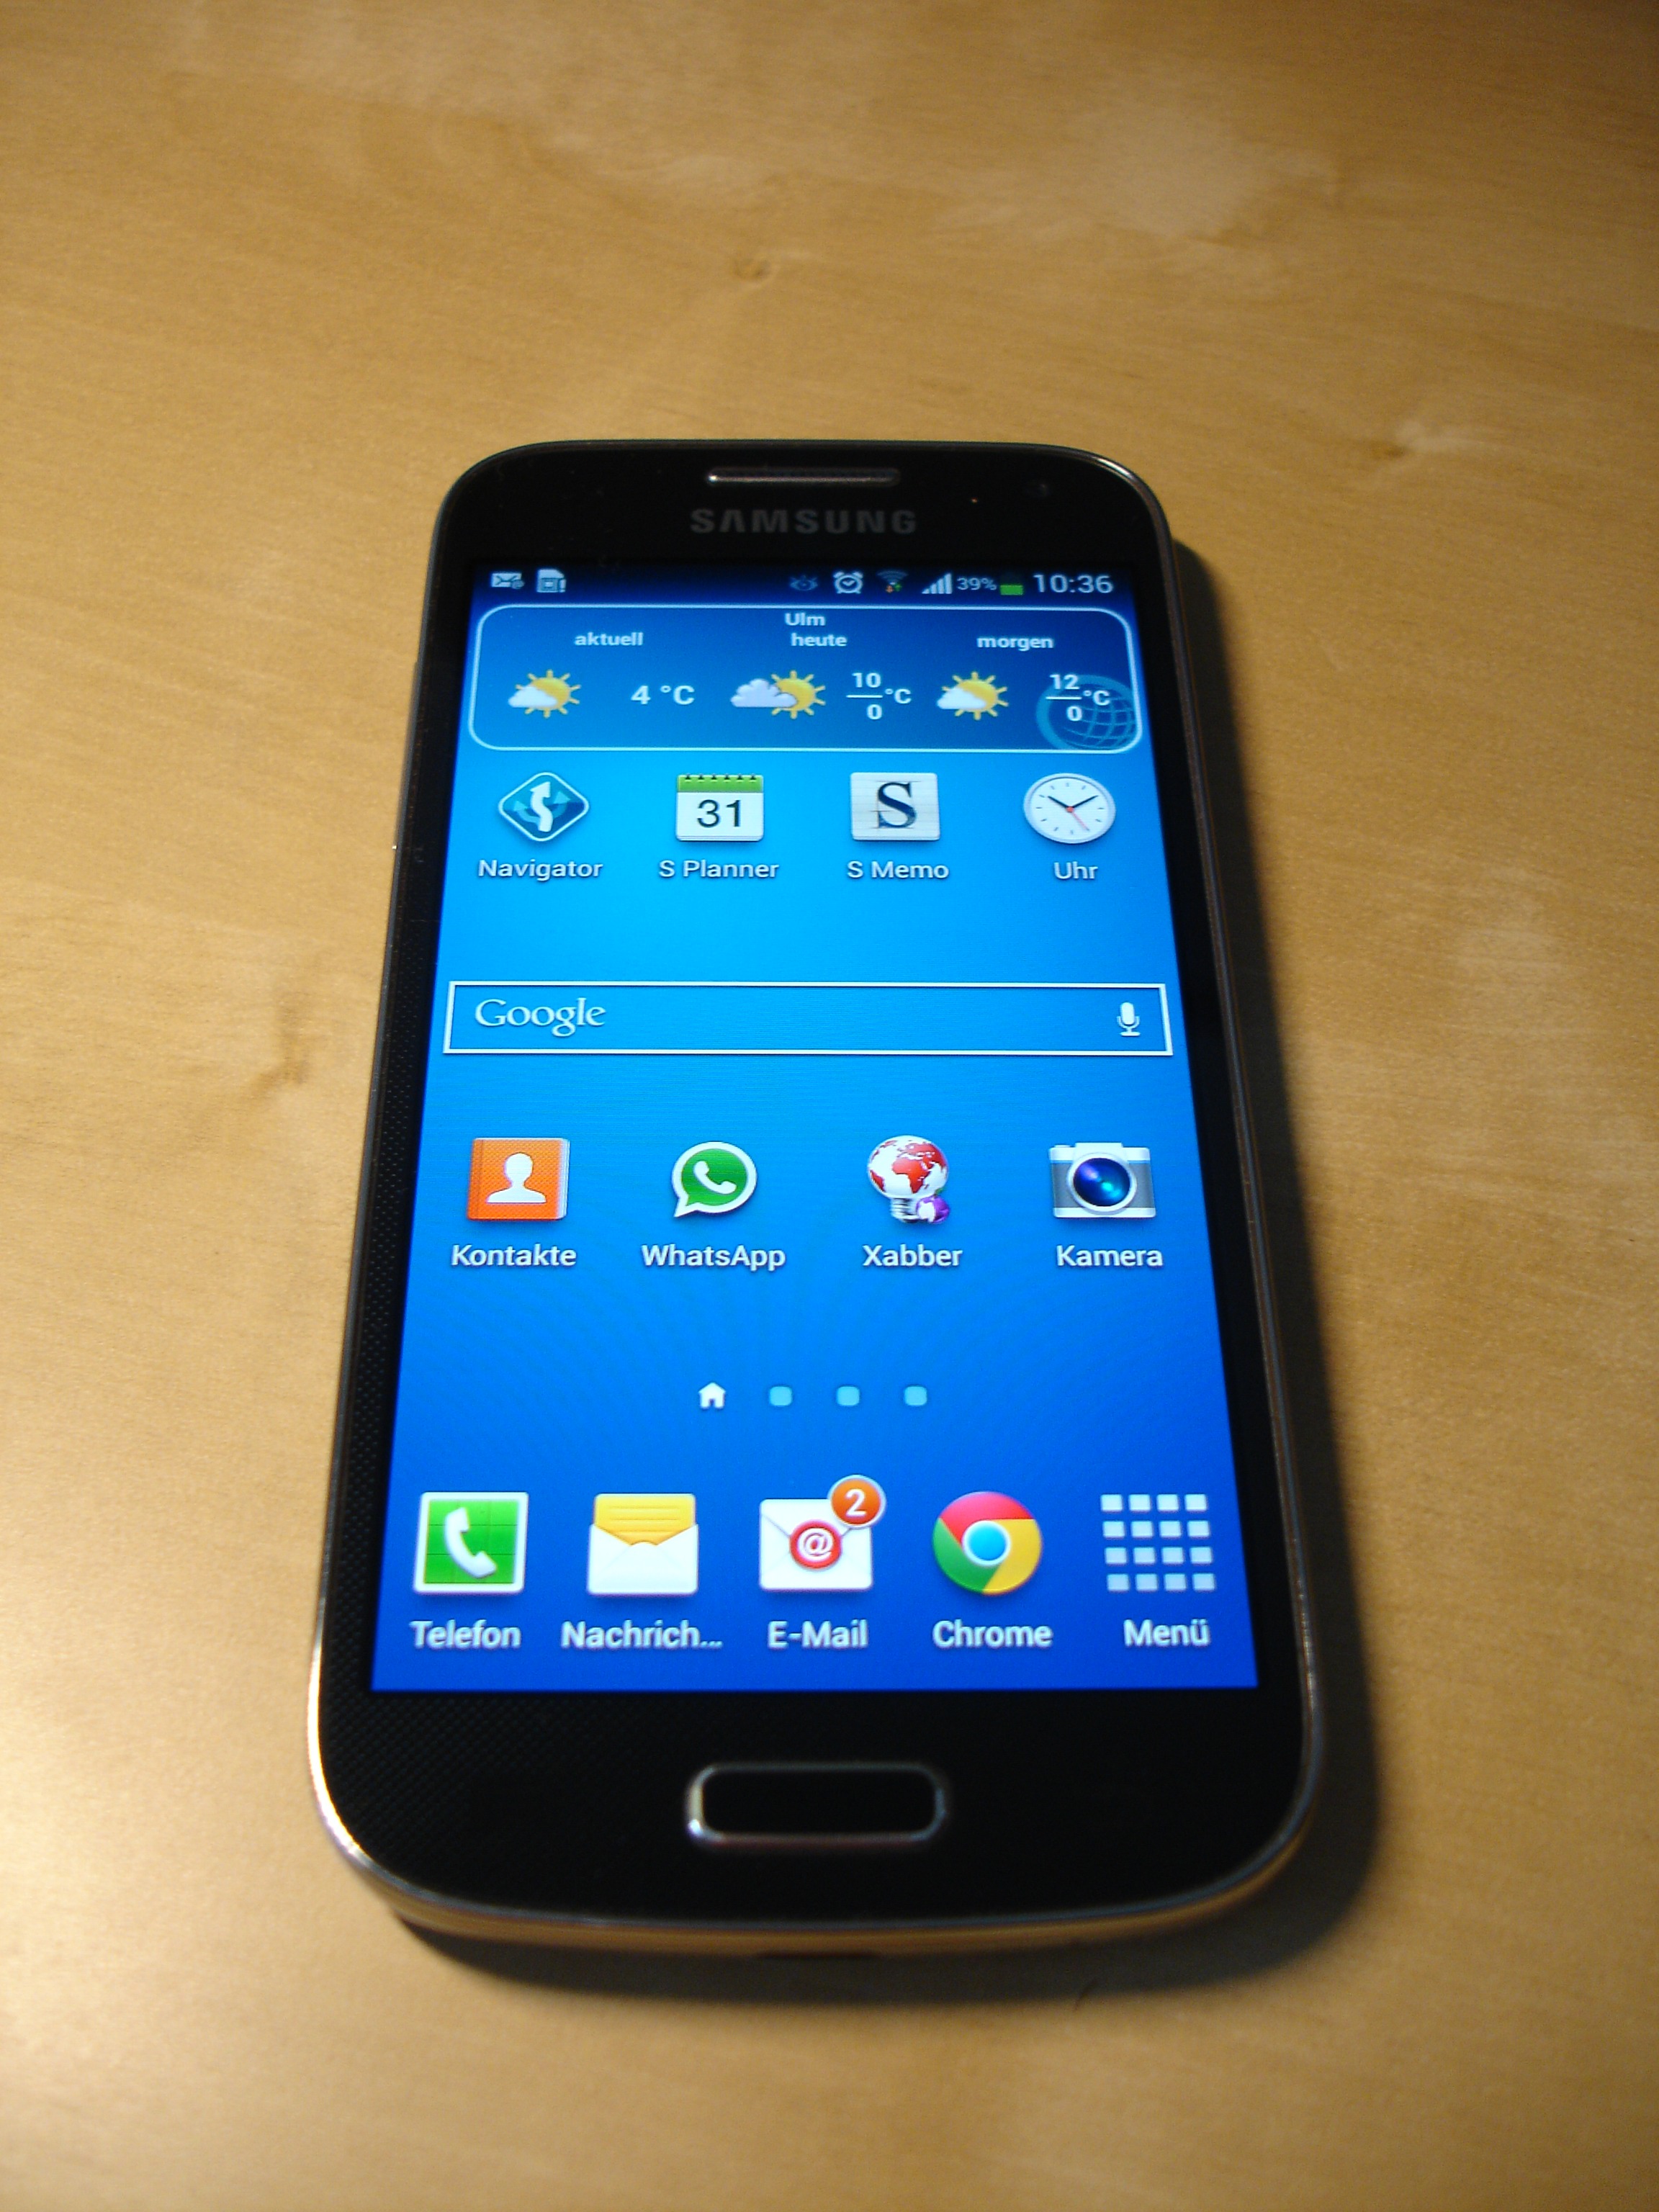 smartphone, samsung, galaxy s4 mini, communication, mobile phone